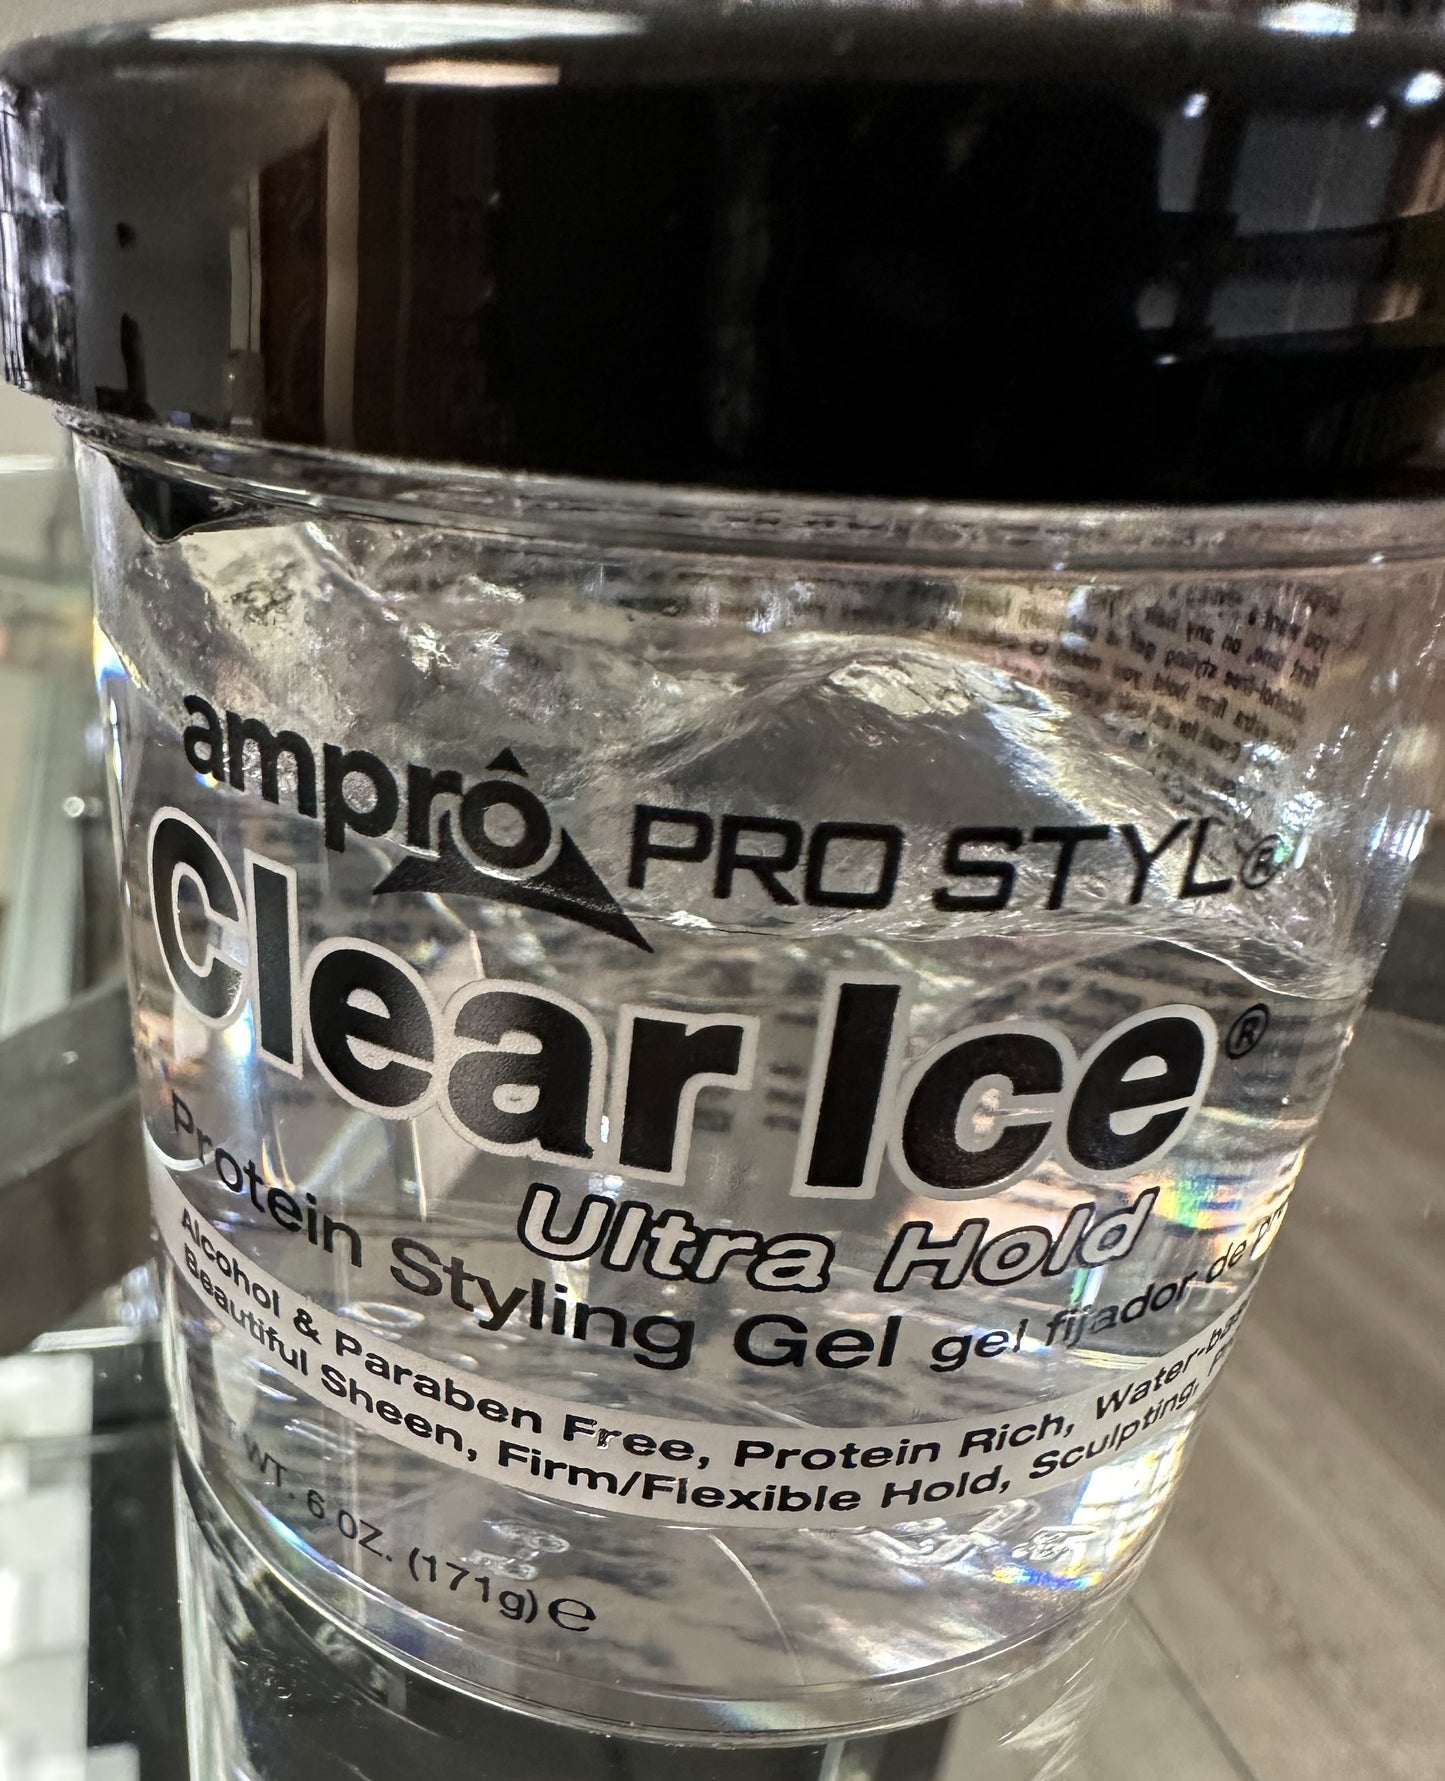 AMPRO PRO STYL CLEAR ICE 6 OZ